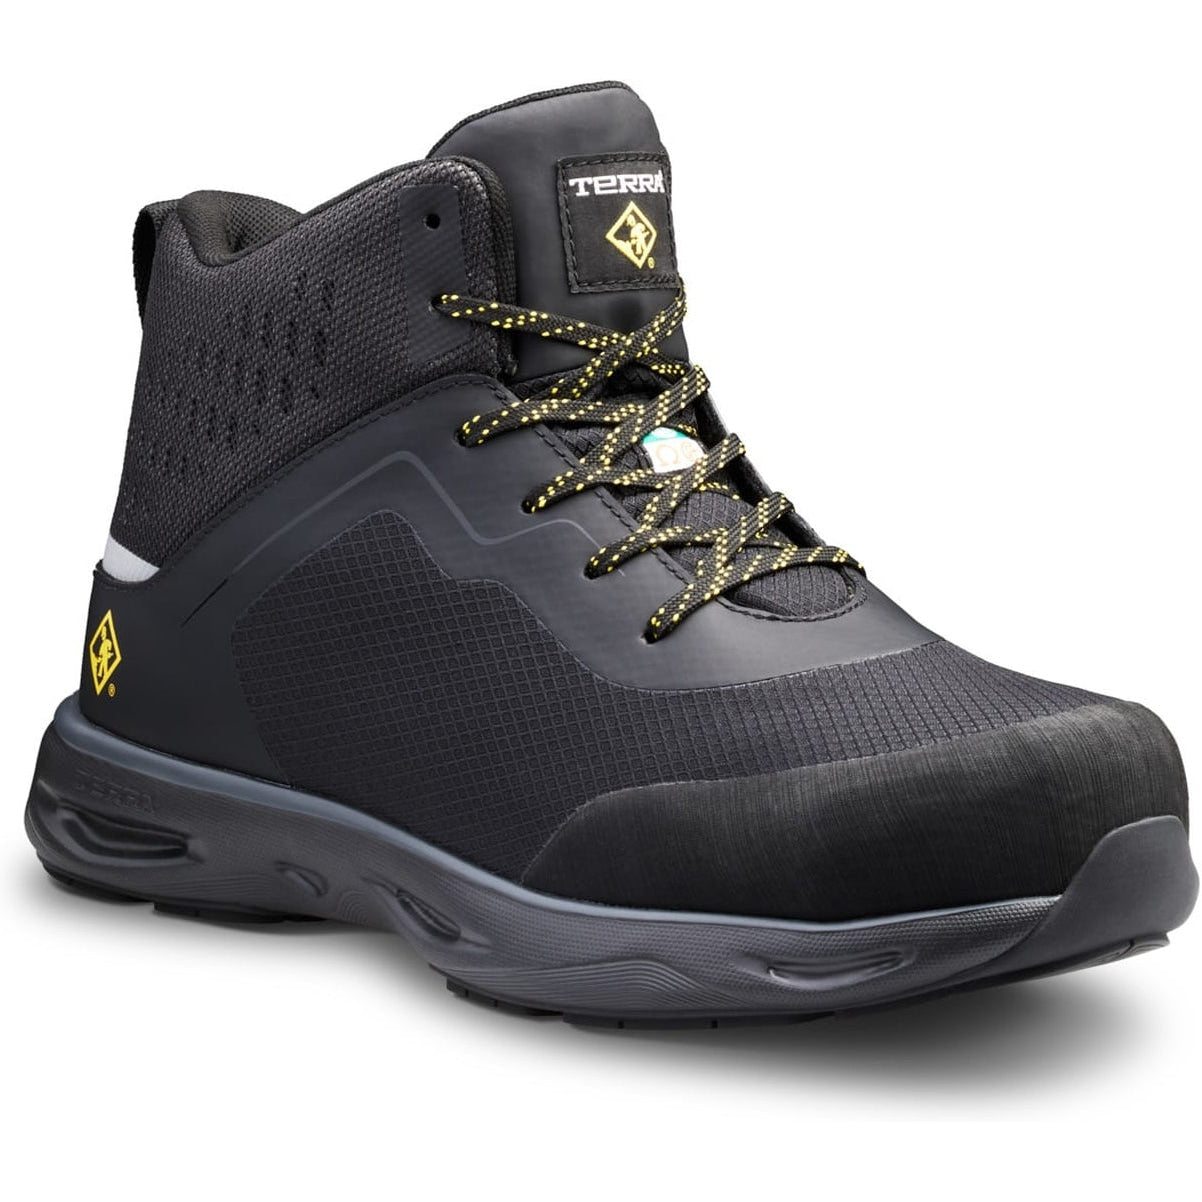 Terra Men's Lites Mid Nano CT Athletic Safety Work Shoe -Black- 4NRTBK 3.5 / Medium / Black - Overlook Boots